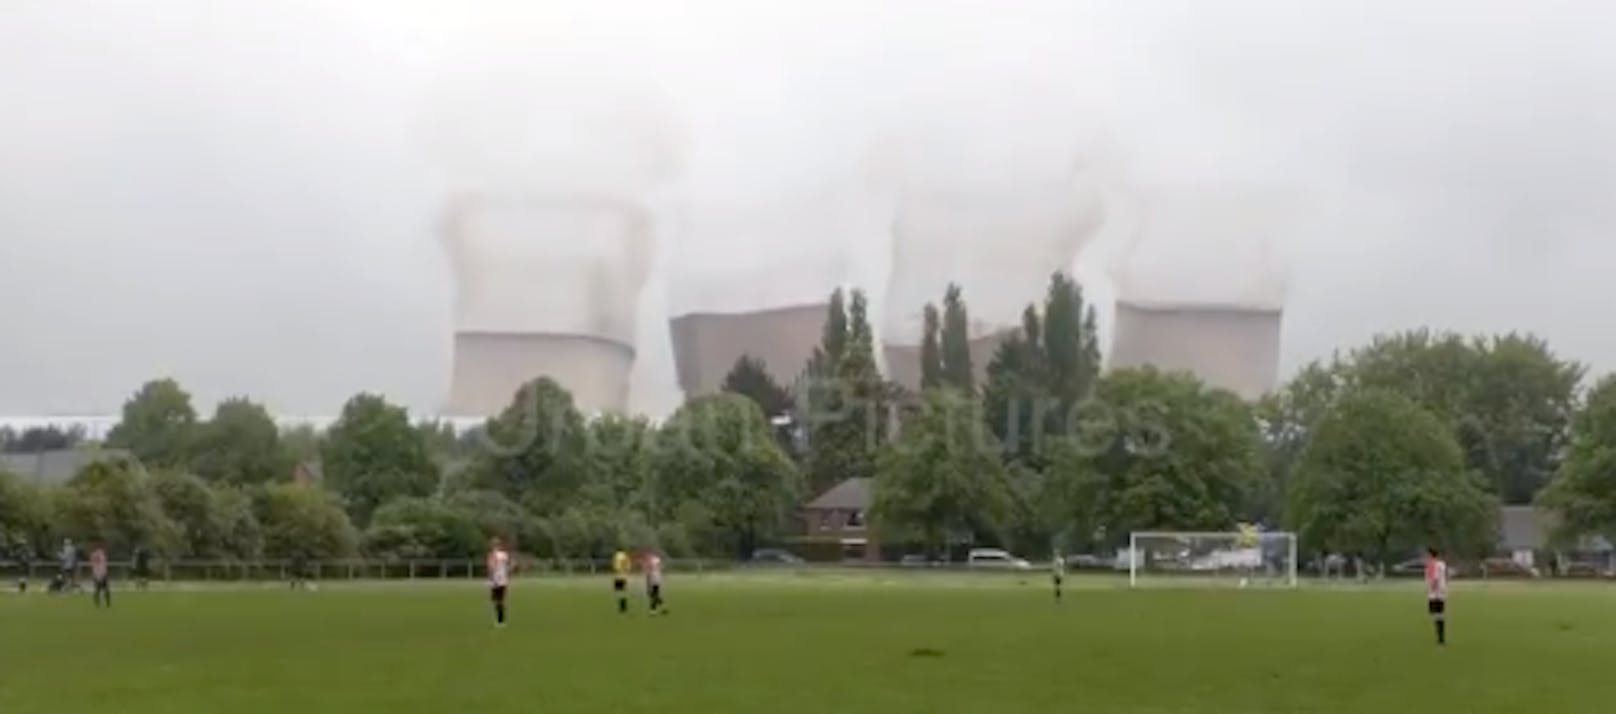 Das Kohlekraftwerk in Rugeley wird gesprengt